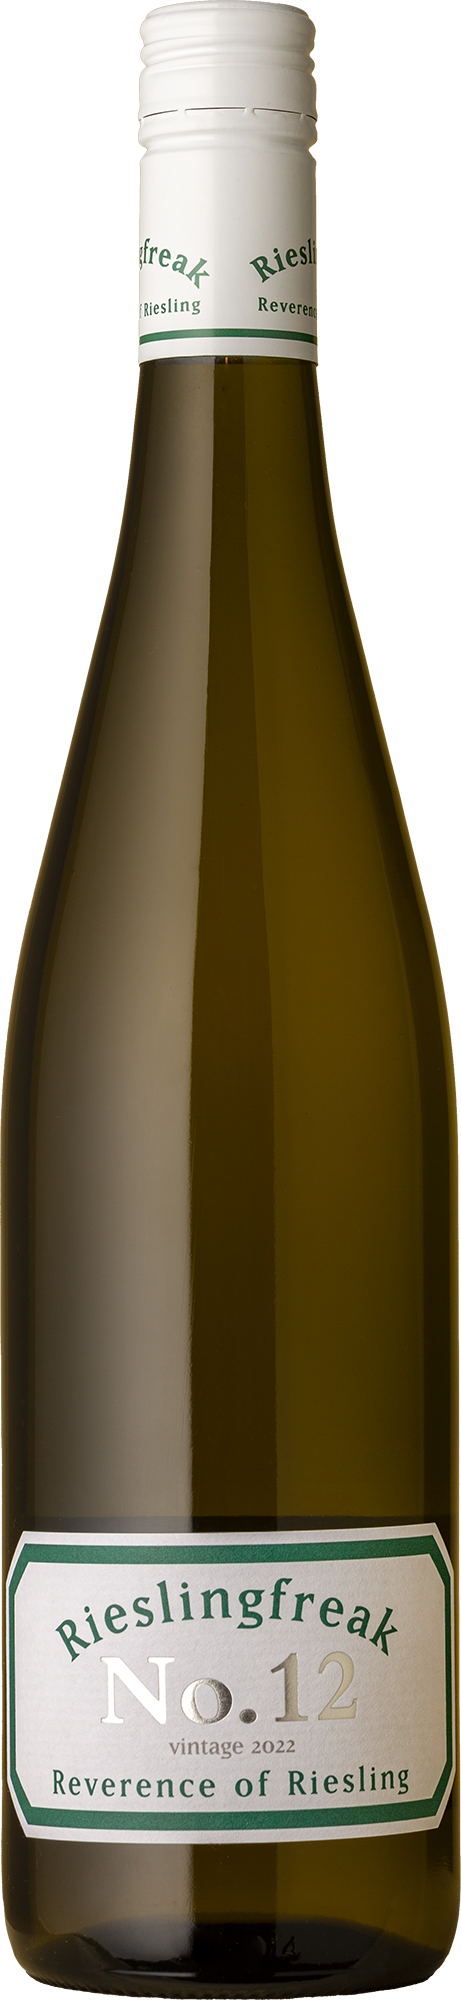 Rieslingfreak - No. 12 Riesling 2022 White Wine